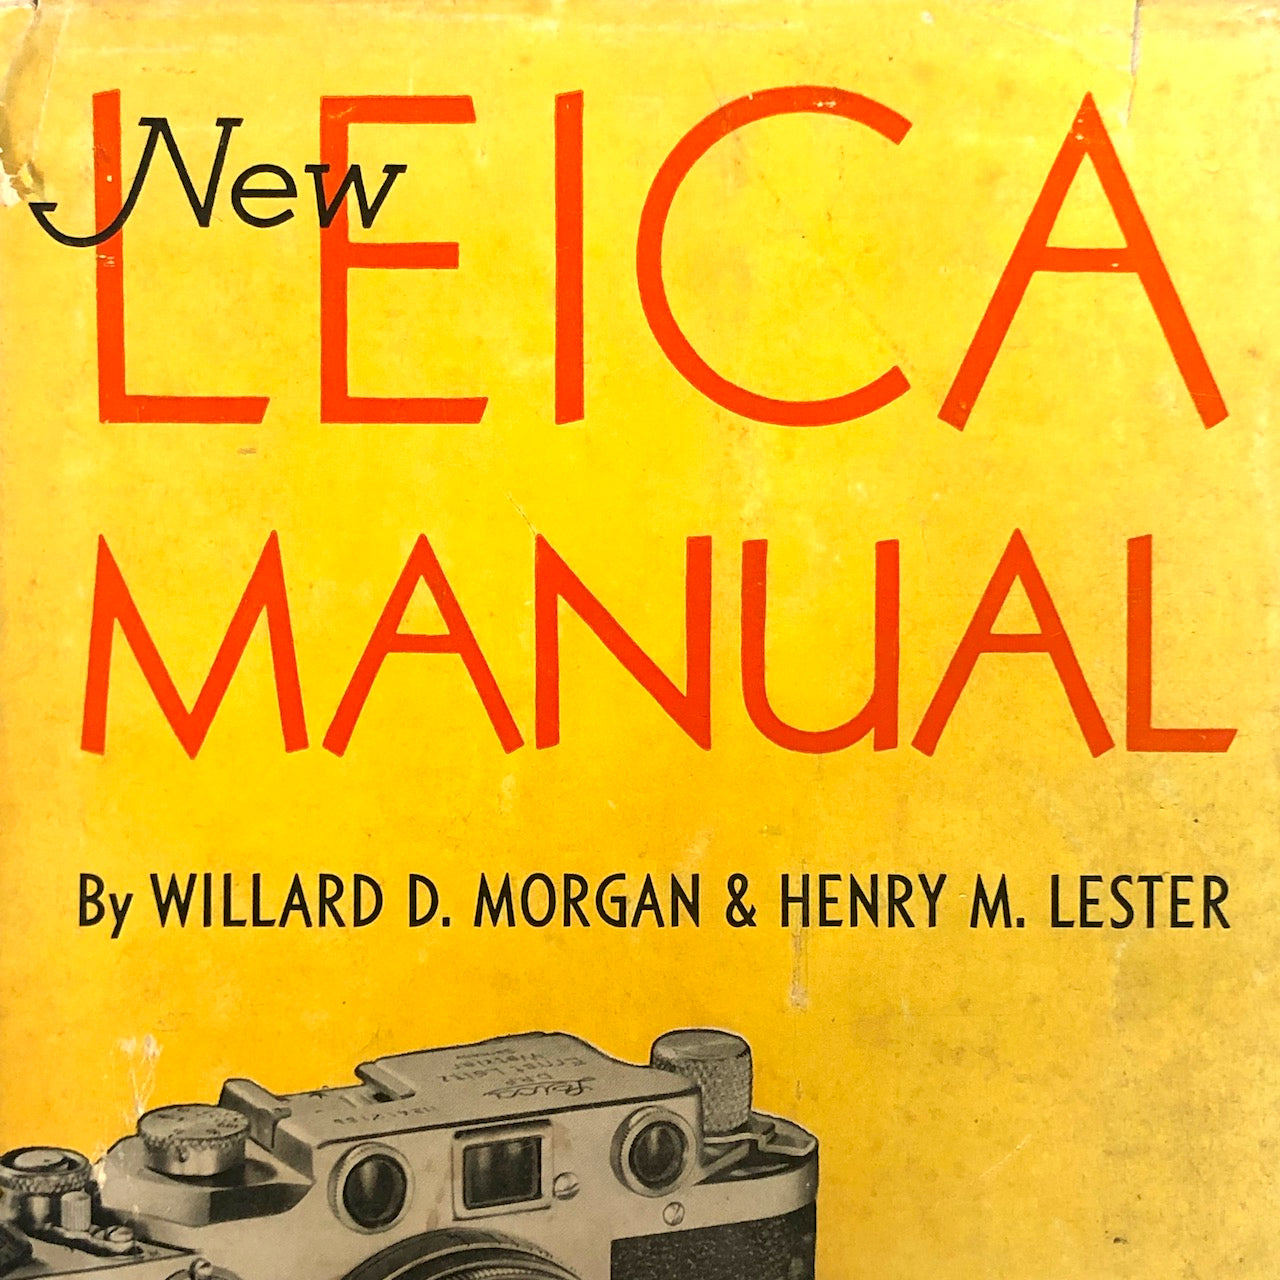 New Leica Manual